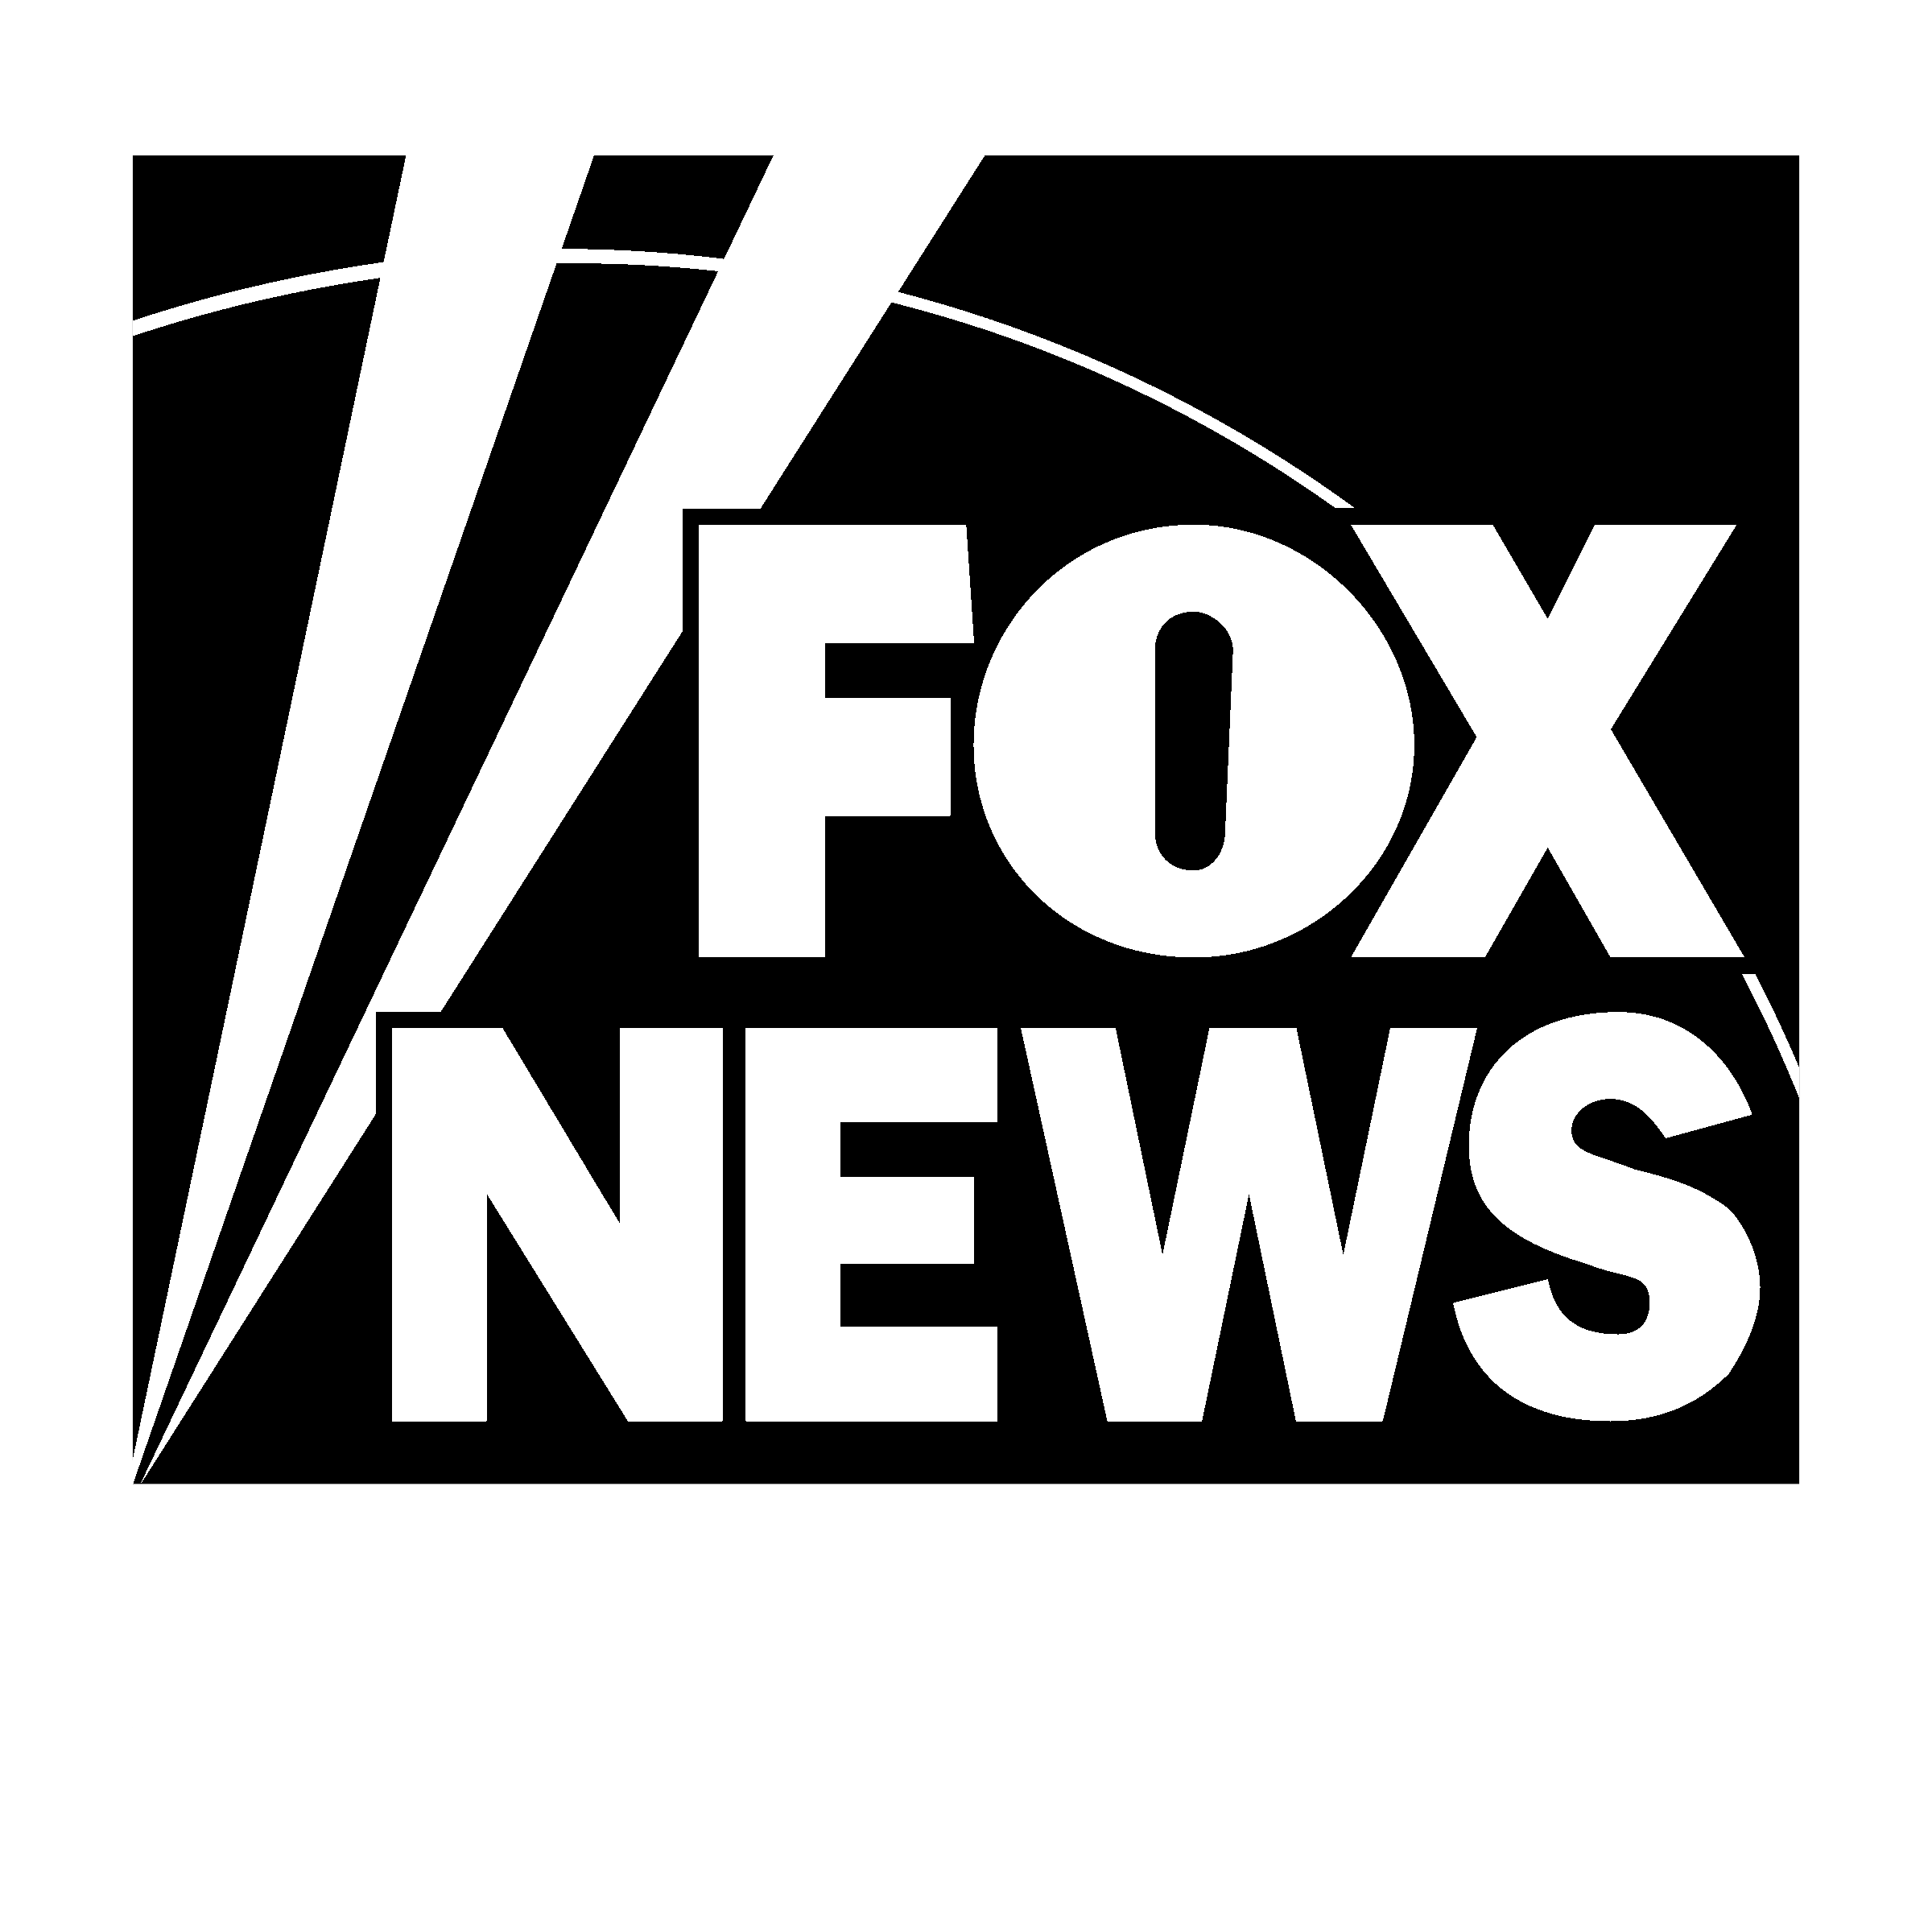 fox-news-logo-black-and-white